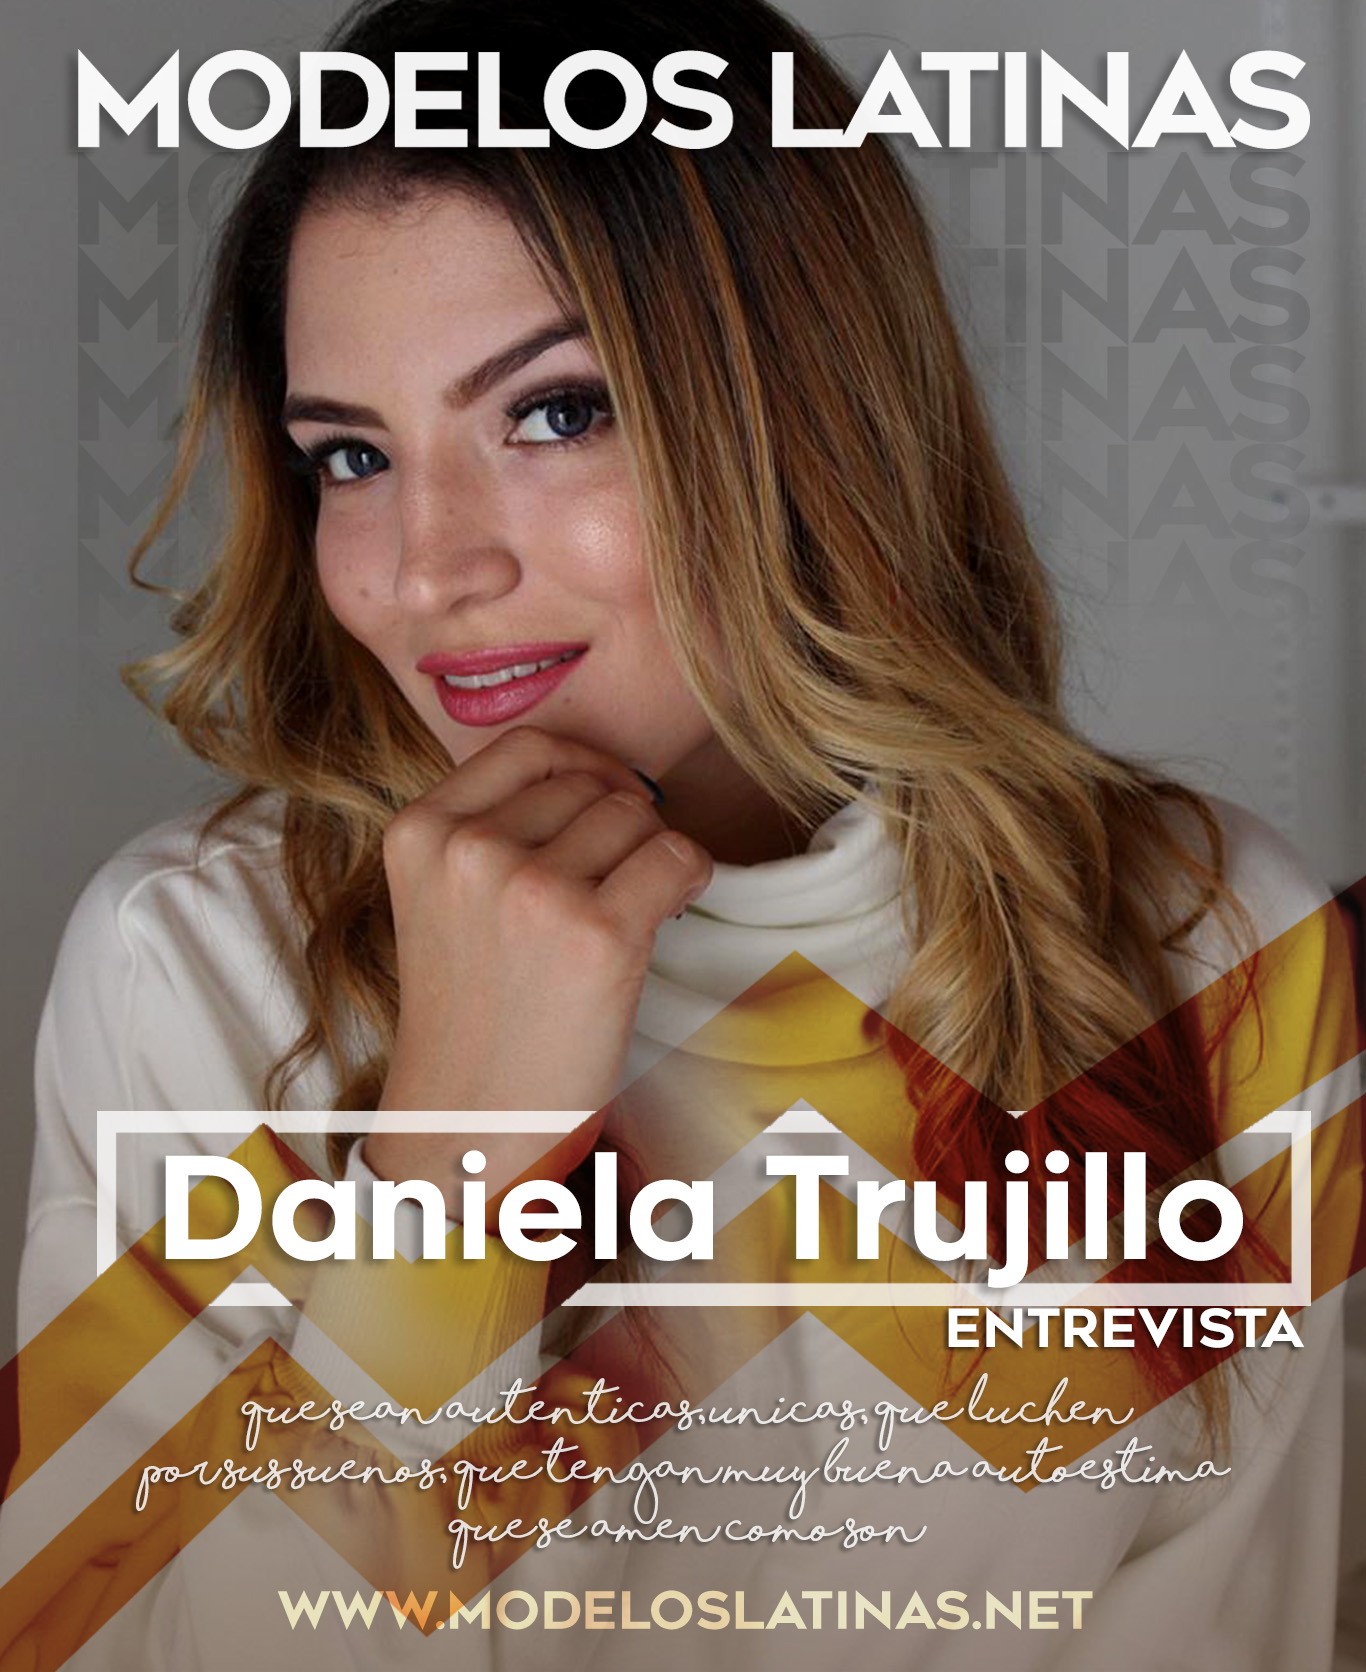 Daniela Trujillo: soltera empedernida y promesa de la TV